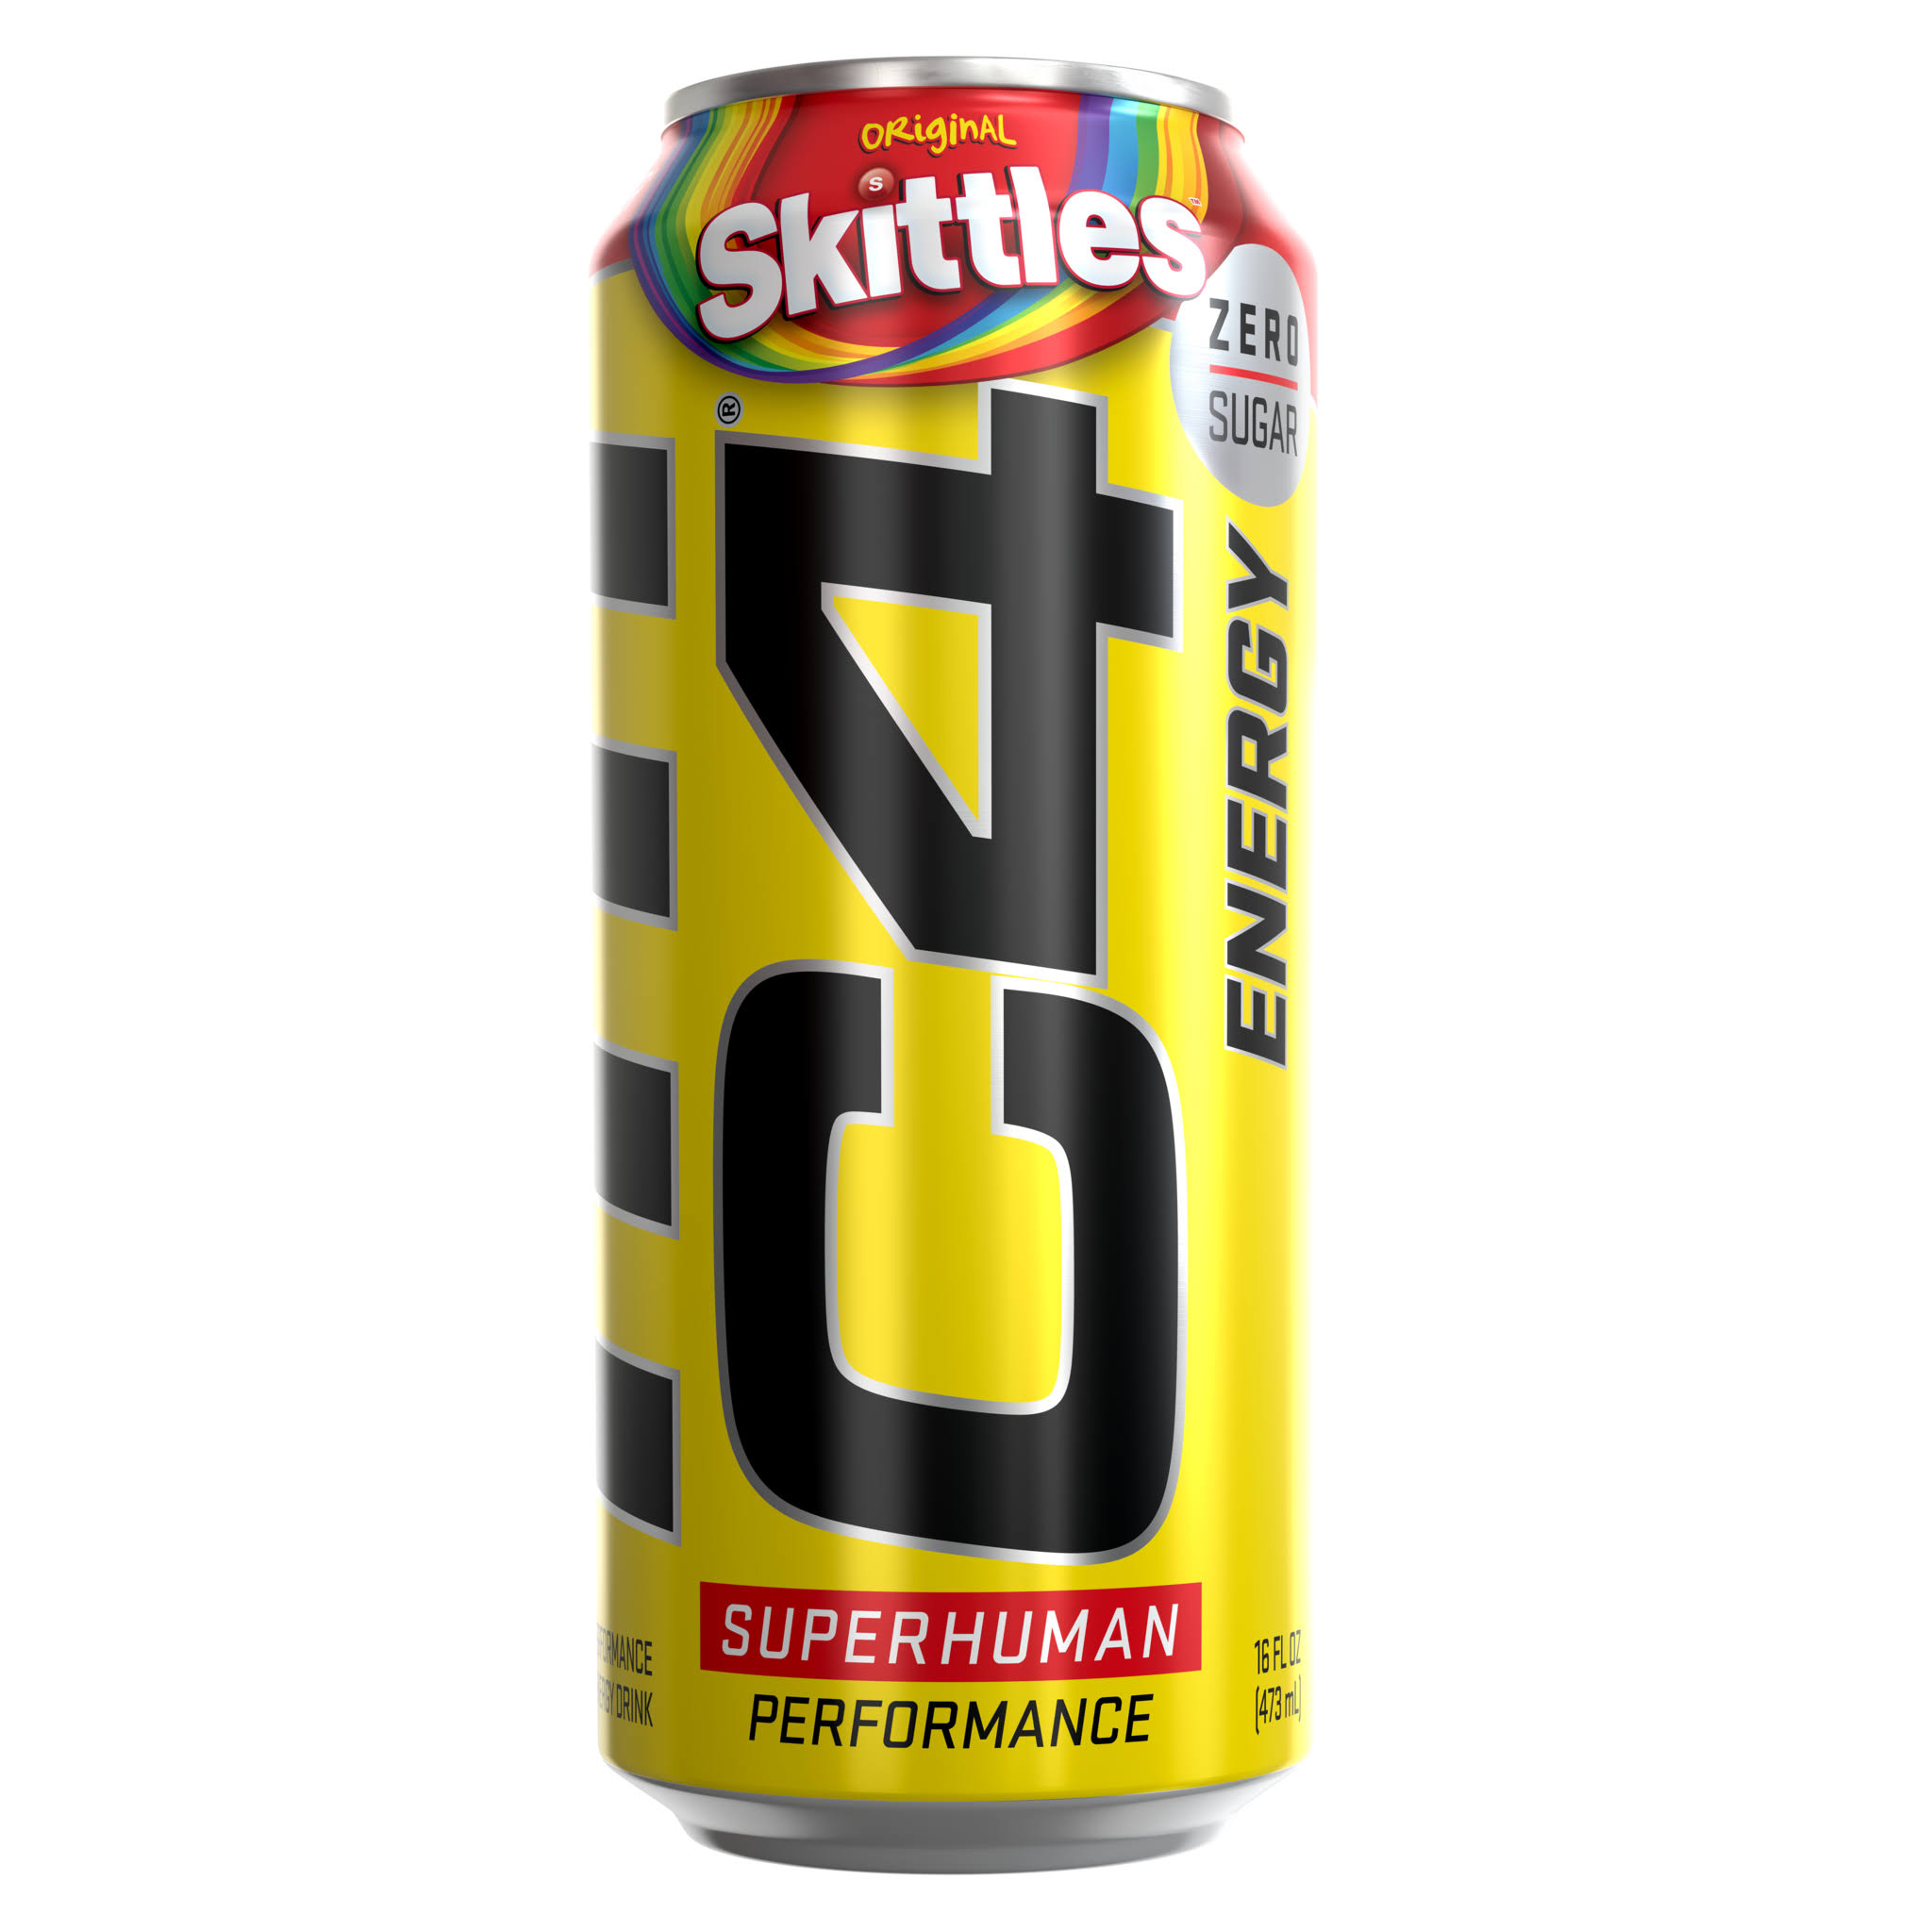 C4 Energy Drink, Zero Sugar, Original Skittles - 16 fl oz